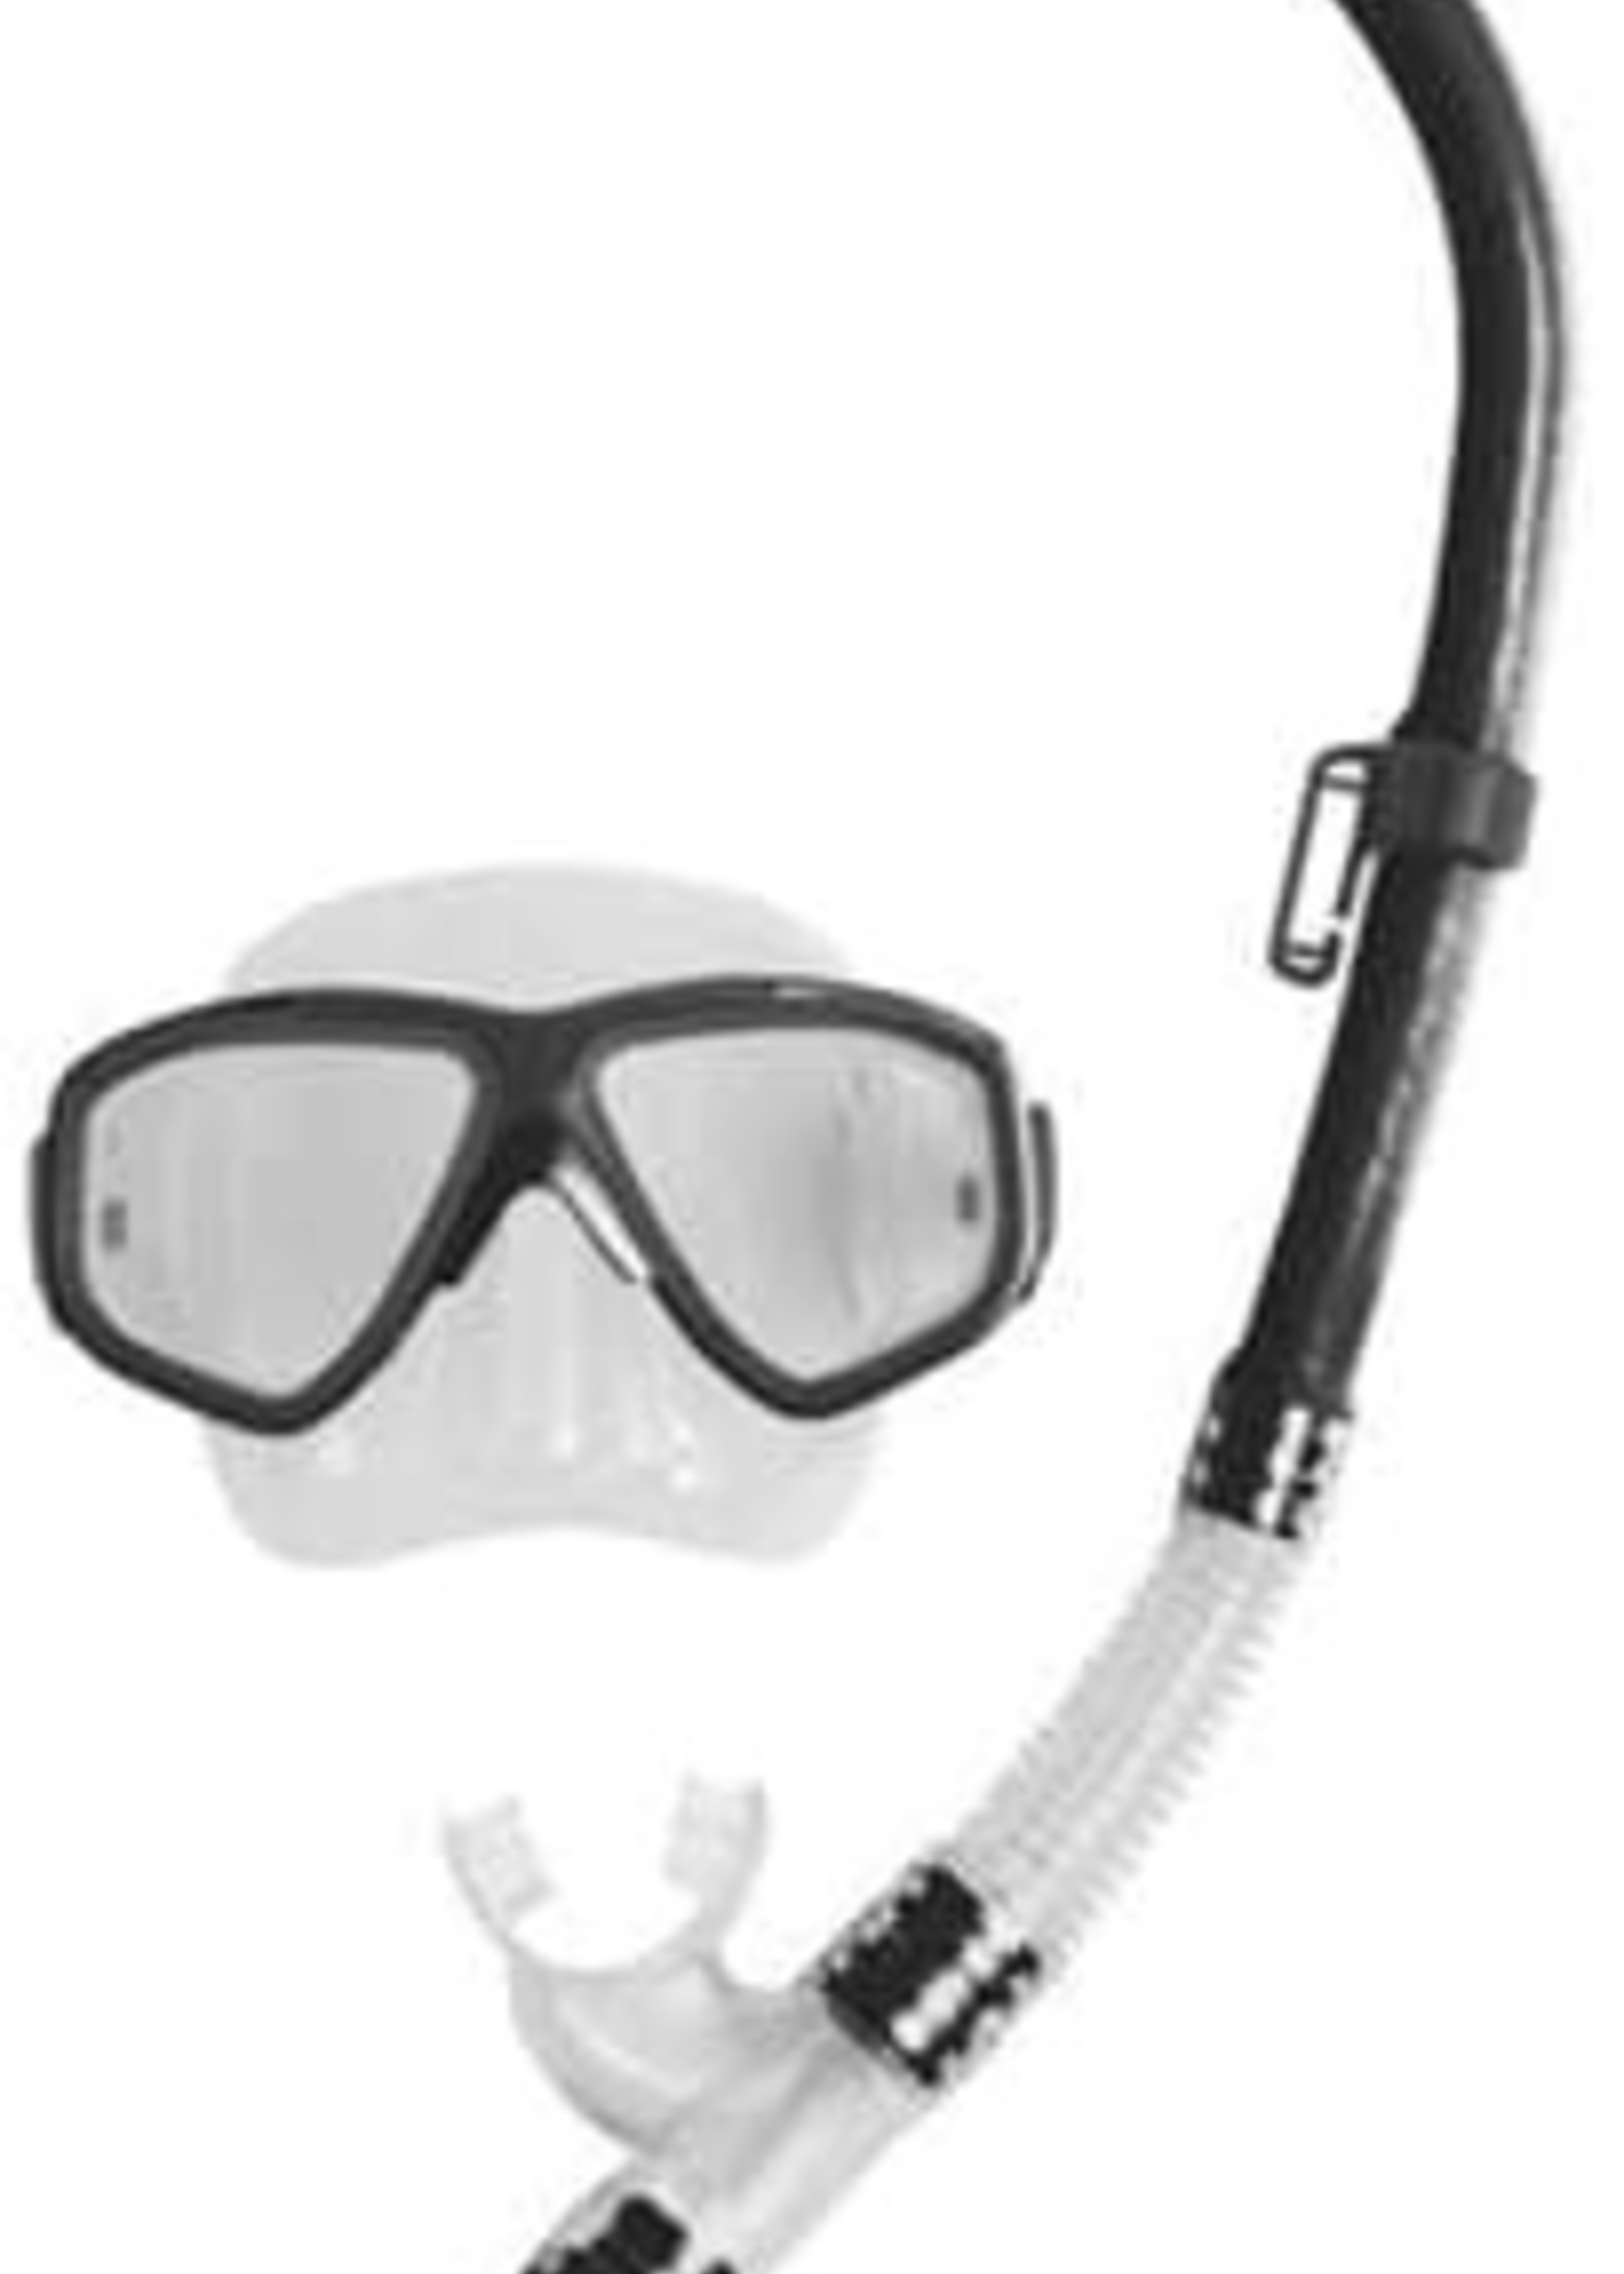 Aqua Lung/Deep See Deep See Adventure Snorkeling Silicone Set